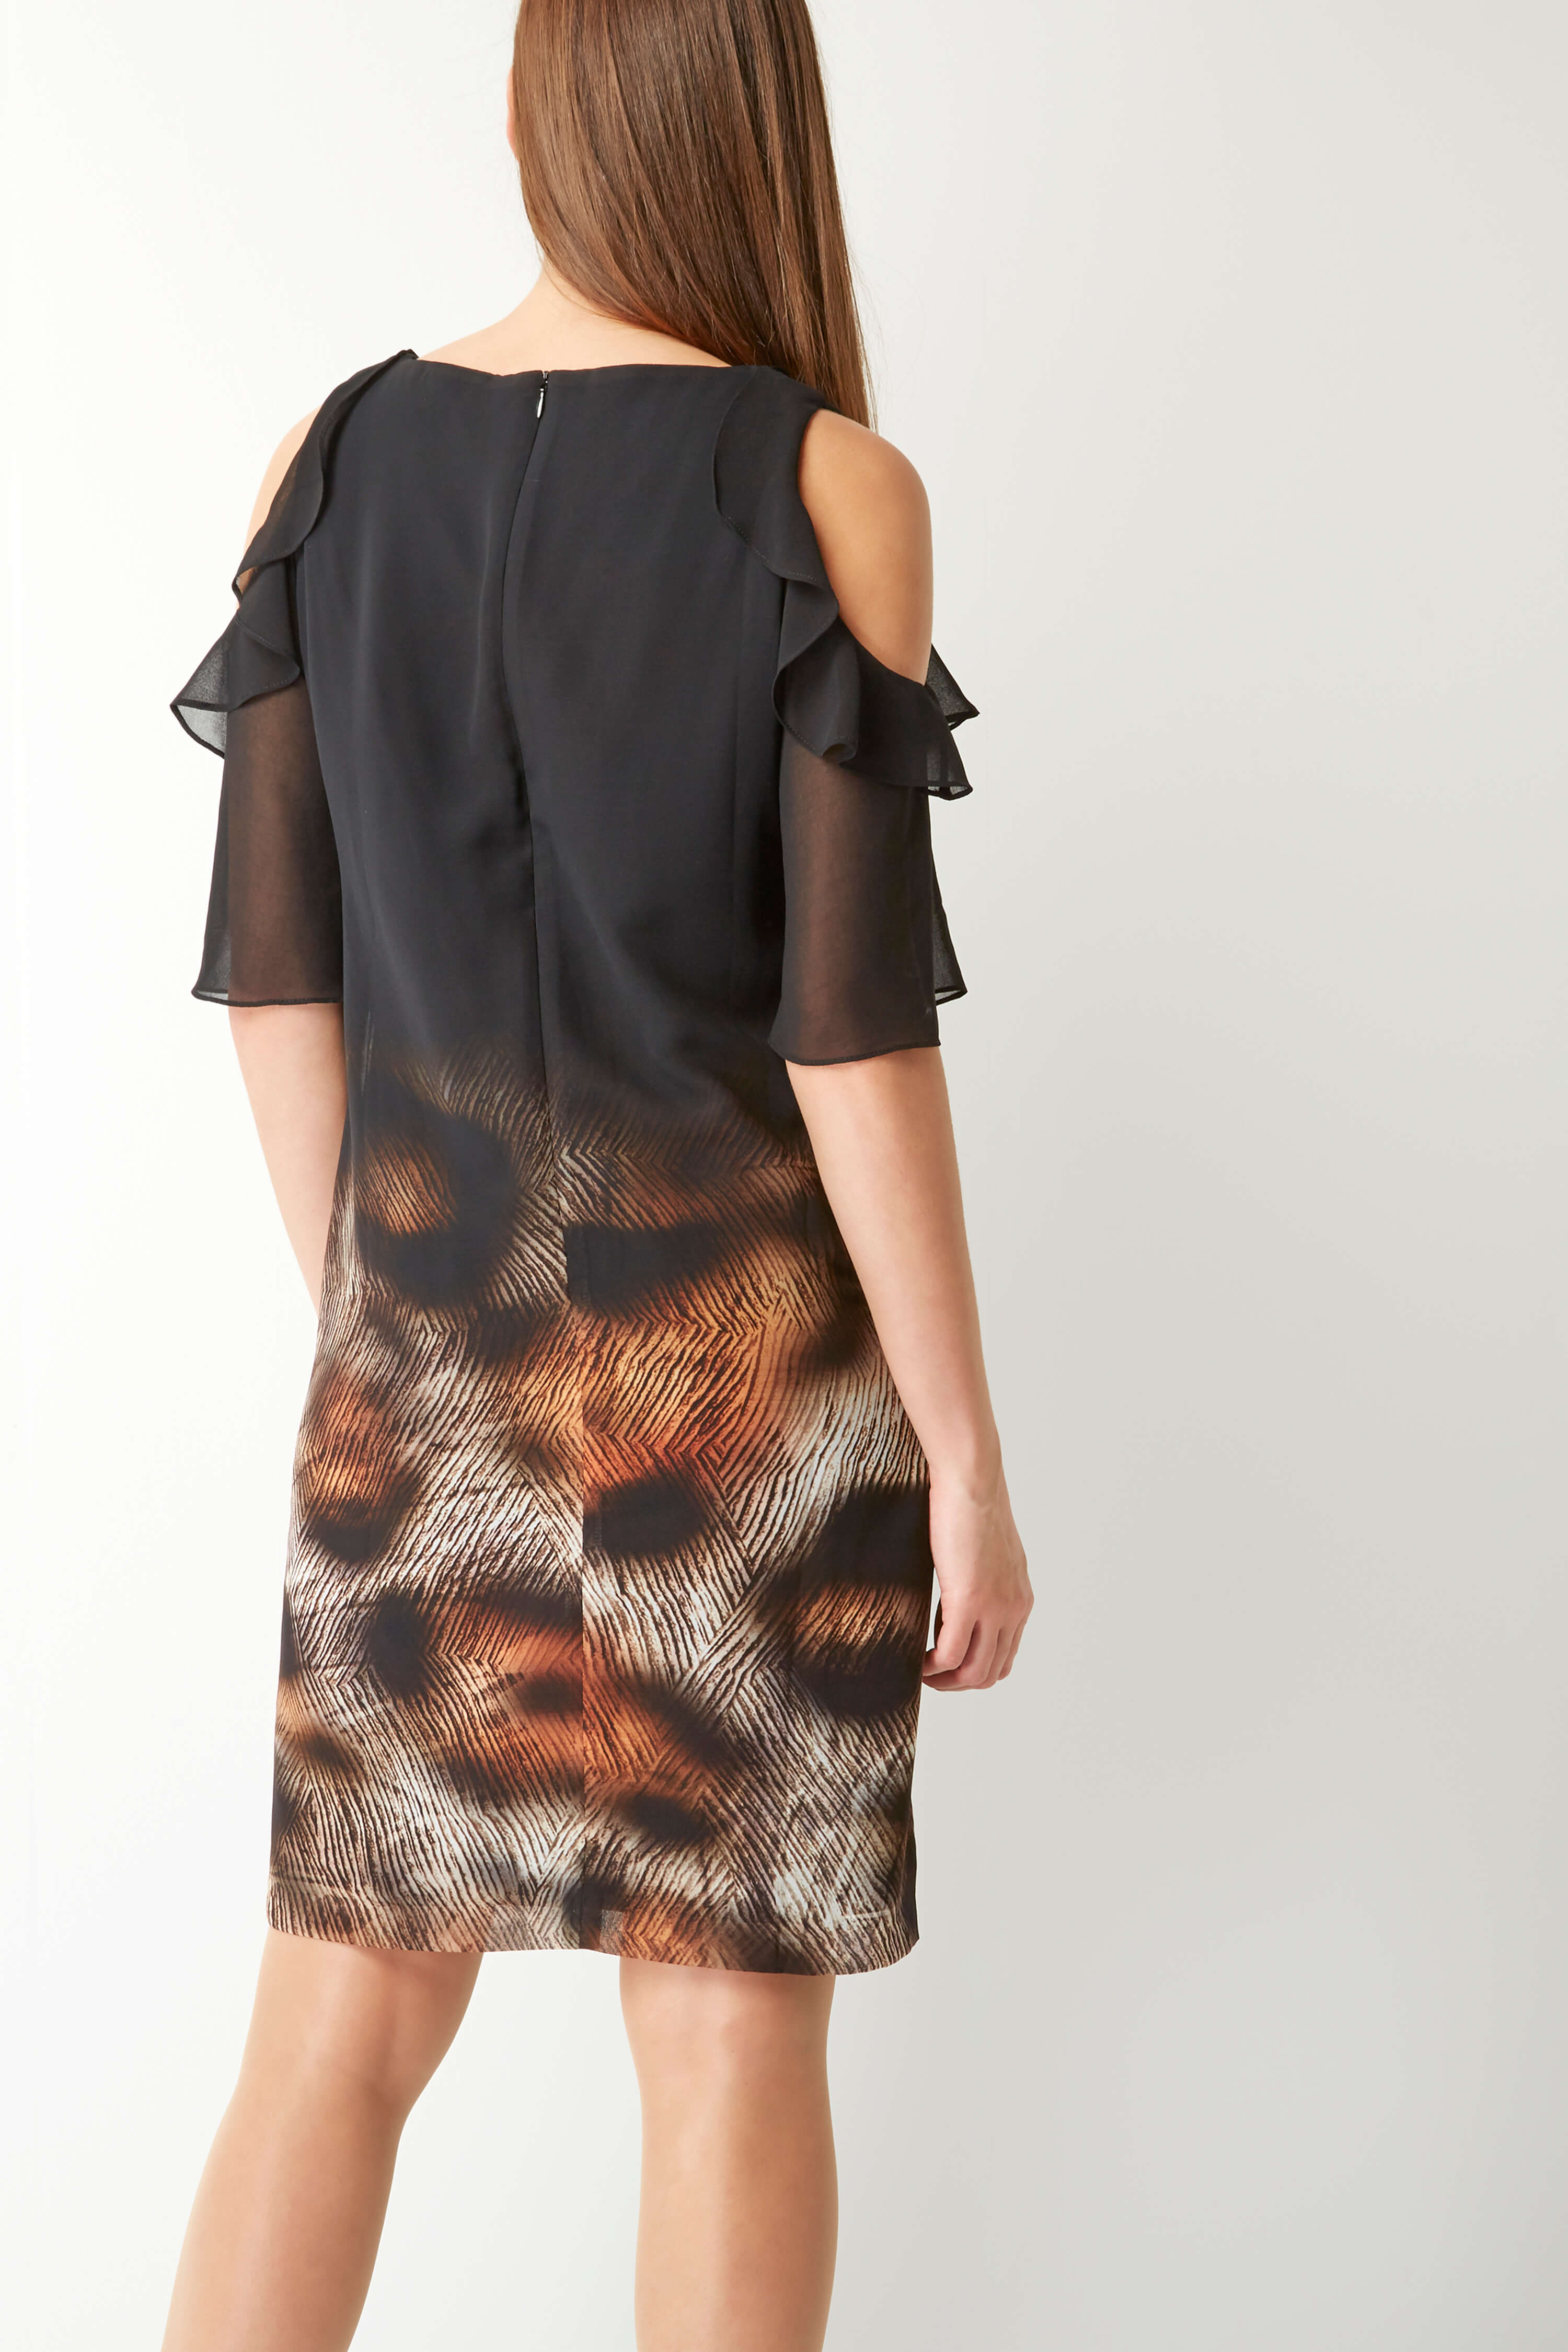 Black Animal Border Print Frill Dress, Image 3 of 5